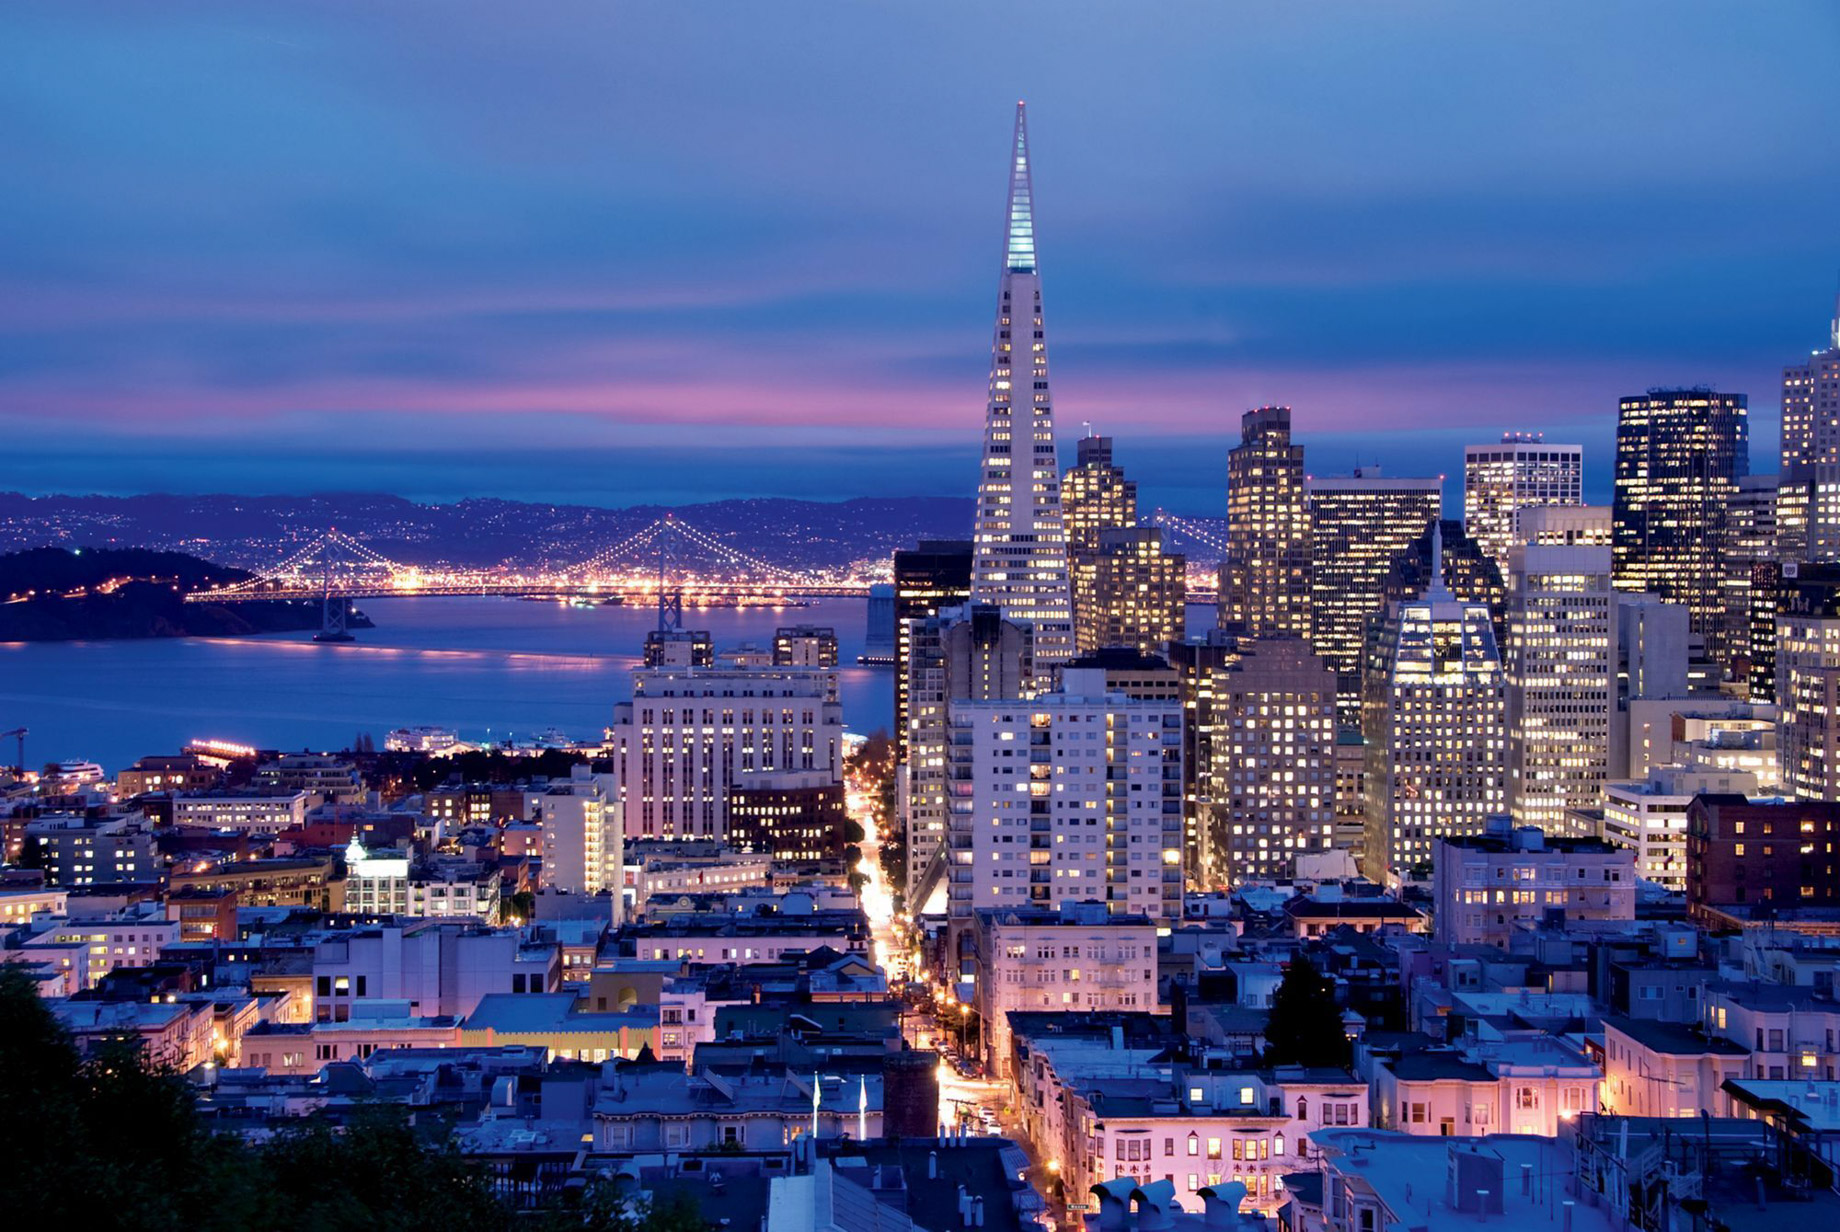 The Ritz-Carlton, San Francisco Hotel - San Francisco, CA, USA - City Skyline Night View